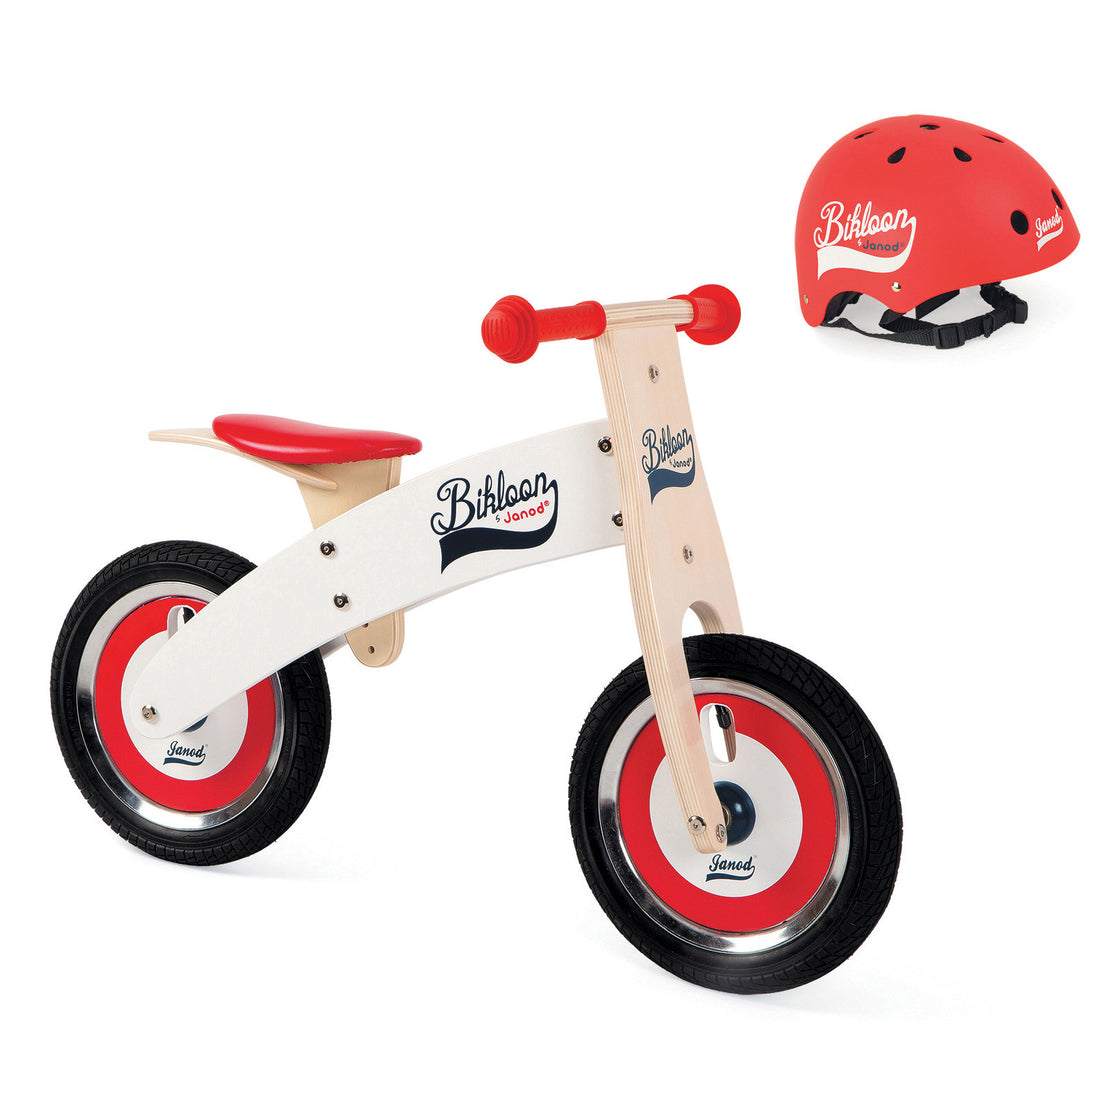 janod-bikloon-balance-bike-red-white-01